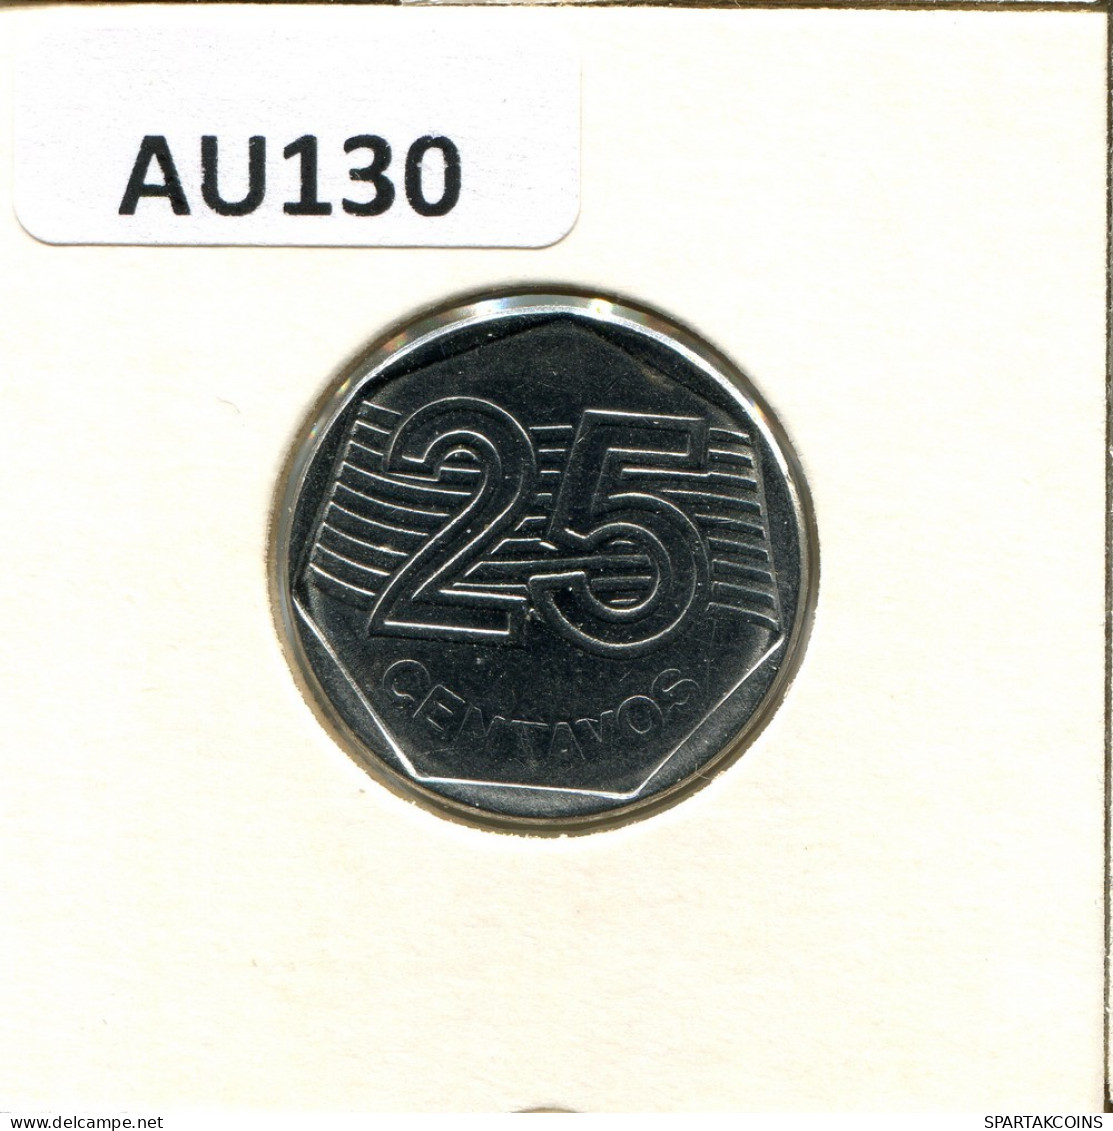 25 CENTAVOS 1995 BRAZIL Coin #AU130.U.A - Brazil